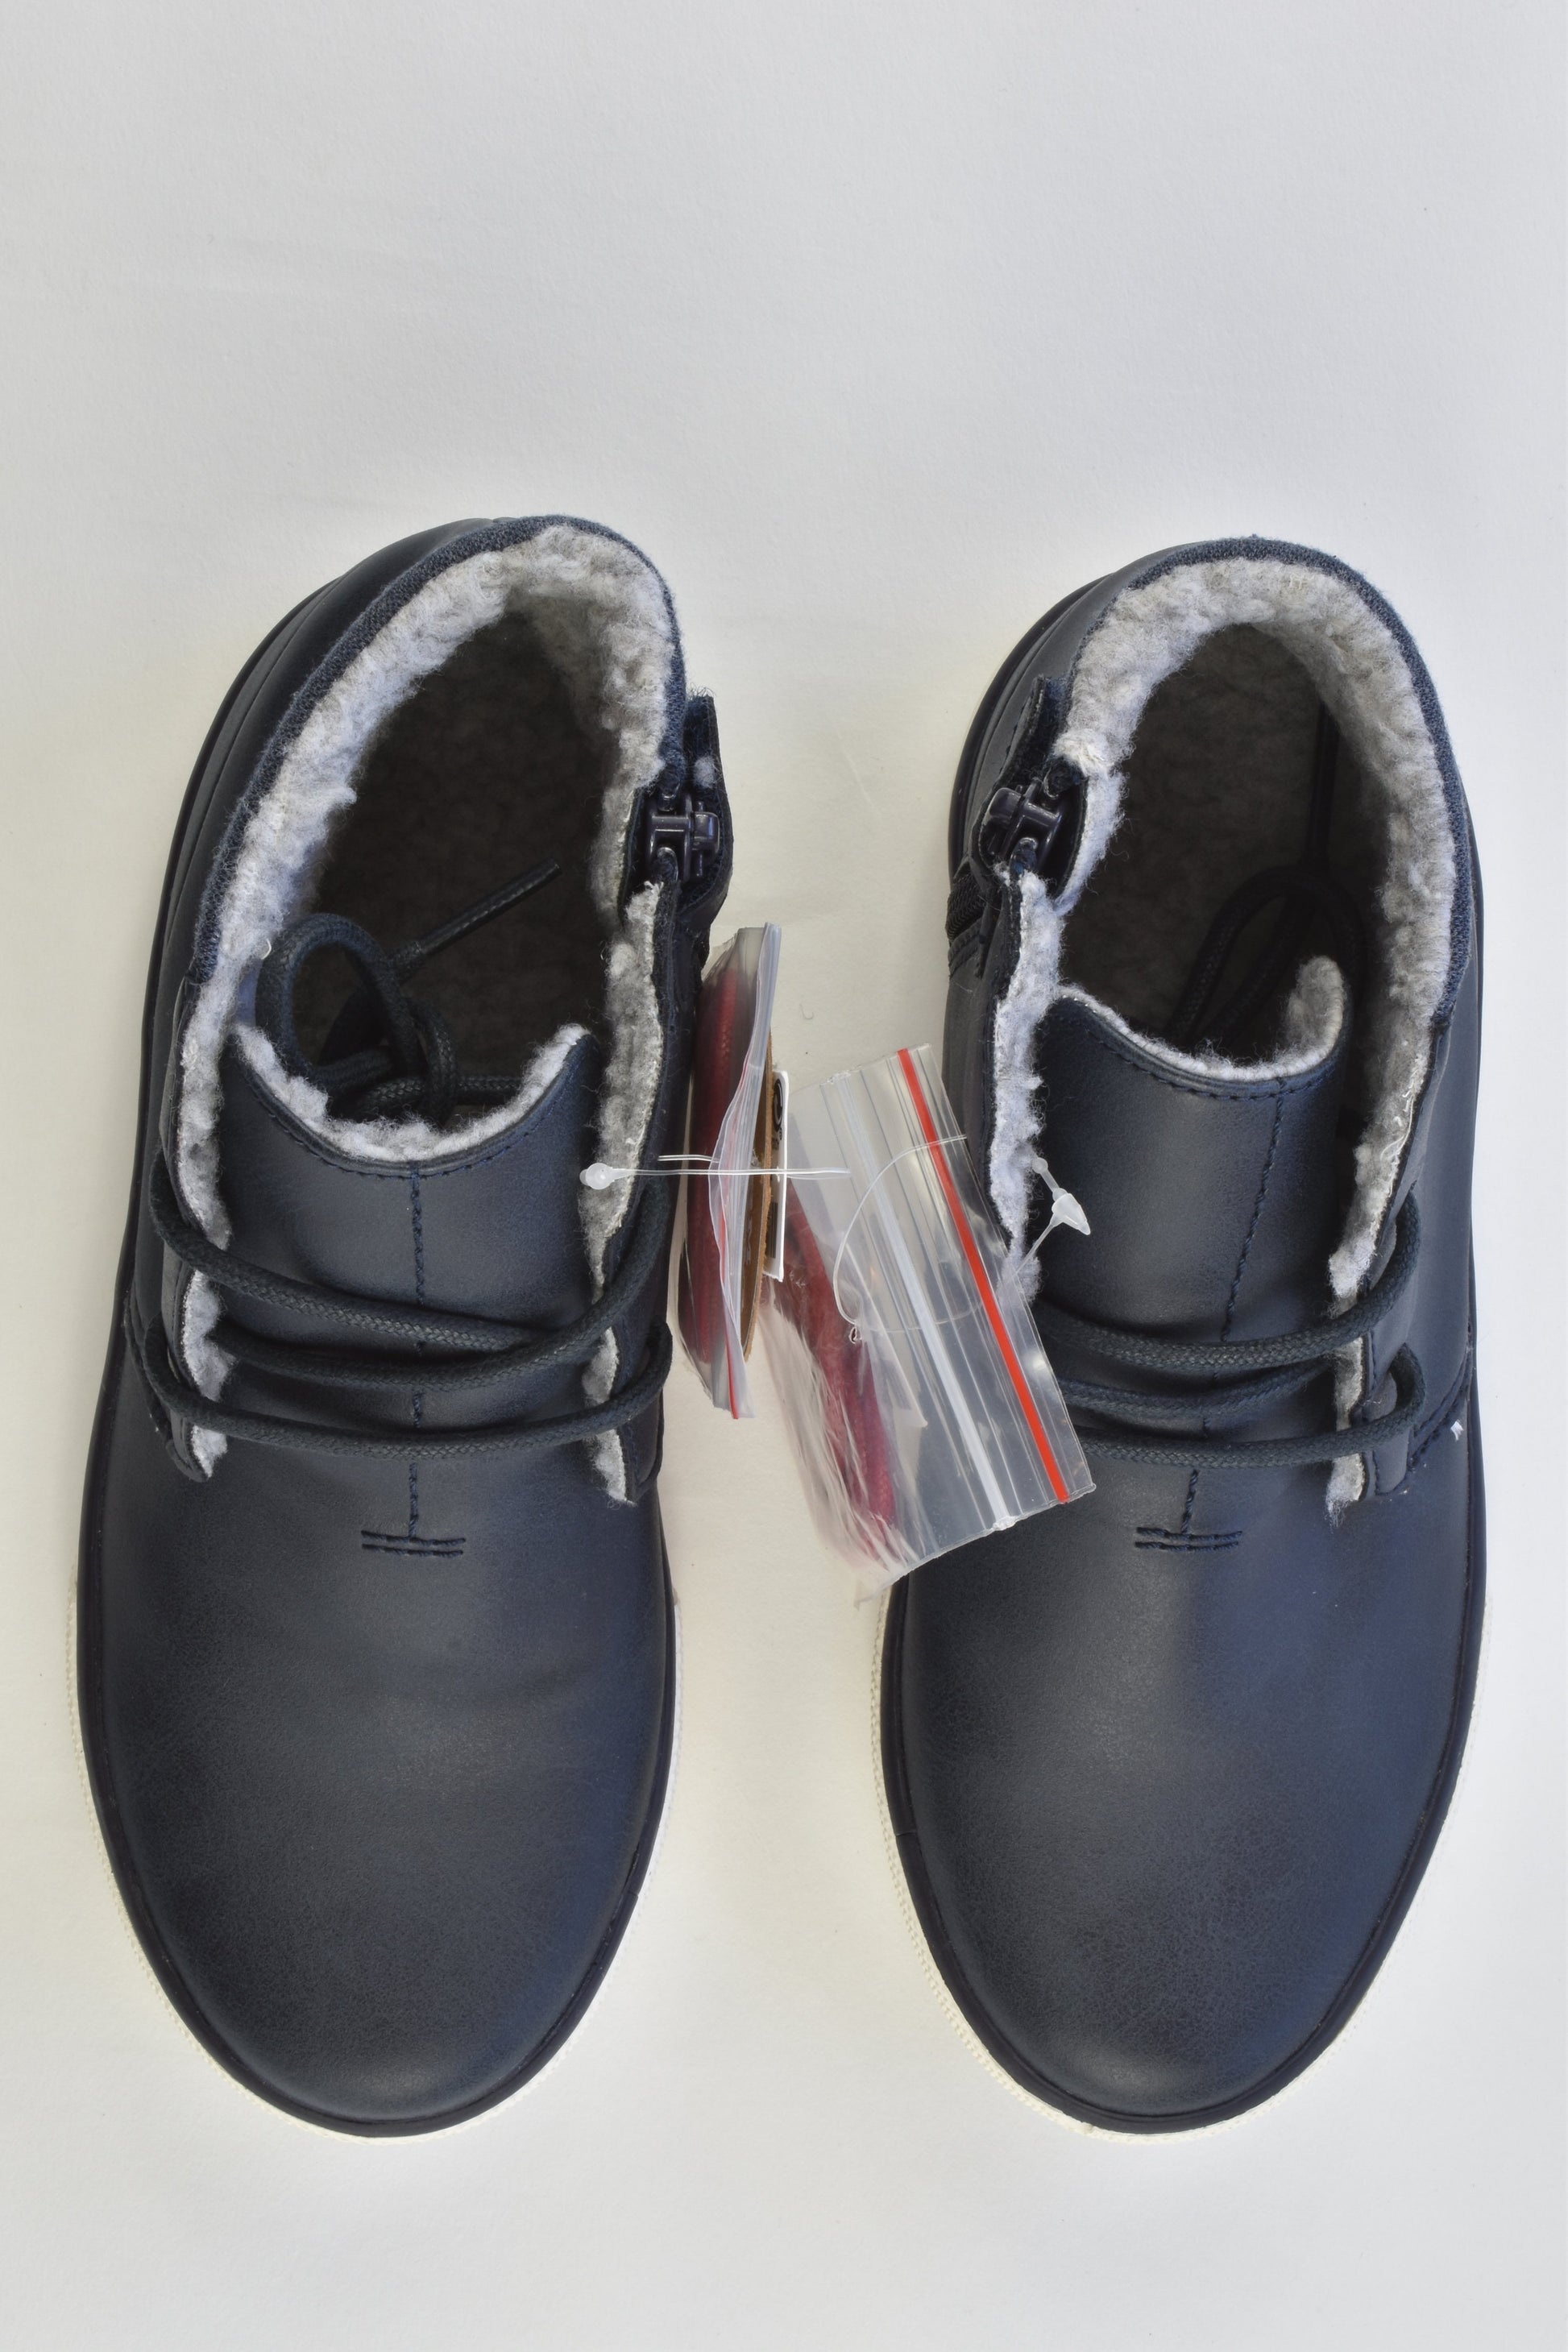 NEW Next (UK) Size 12 Shoes